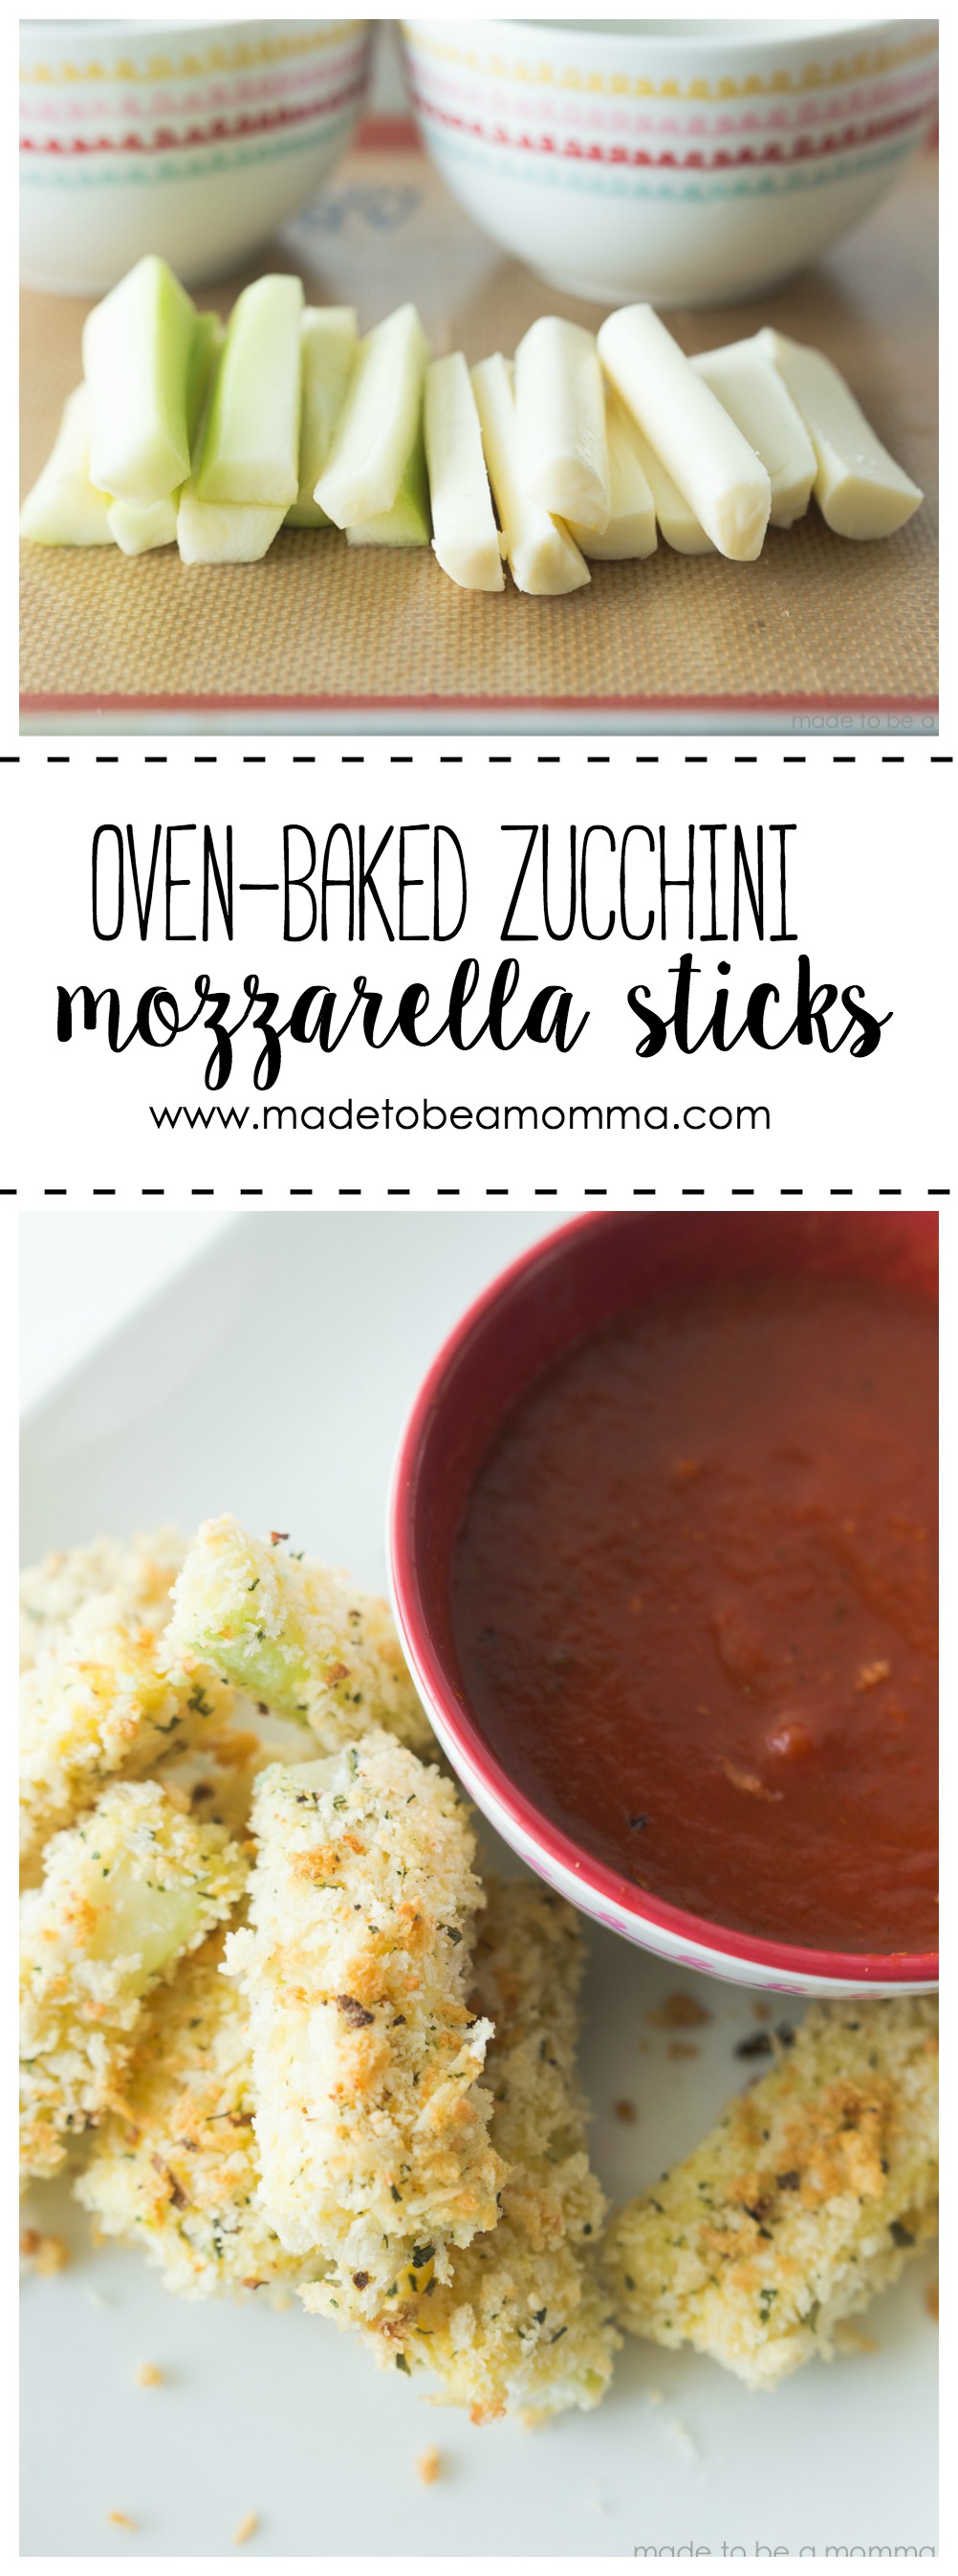 Oven Baked Zucchini Sticks